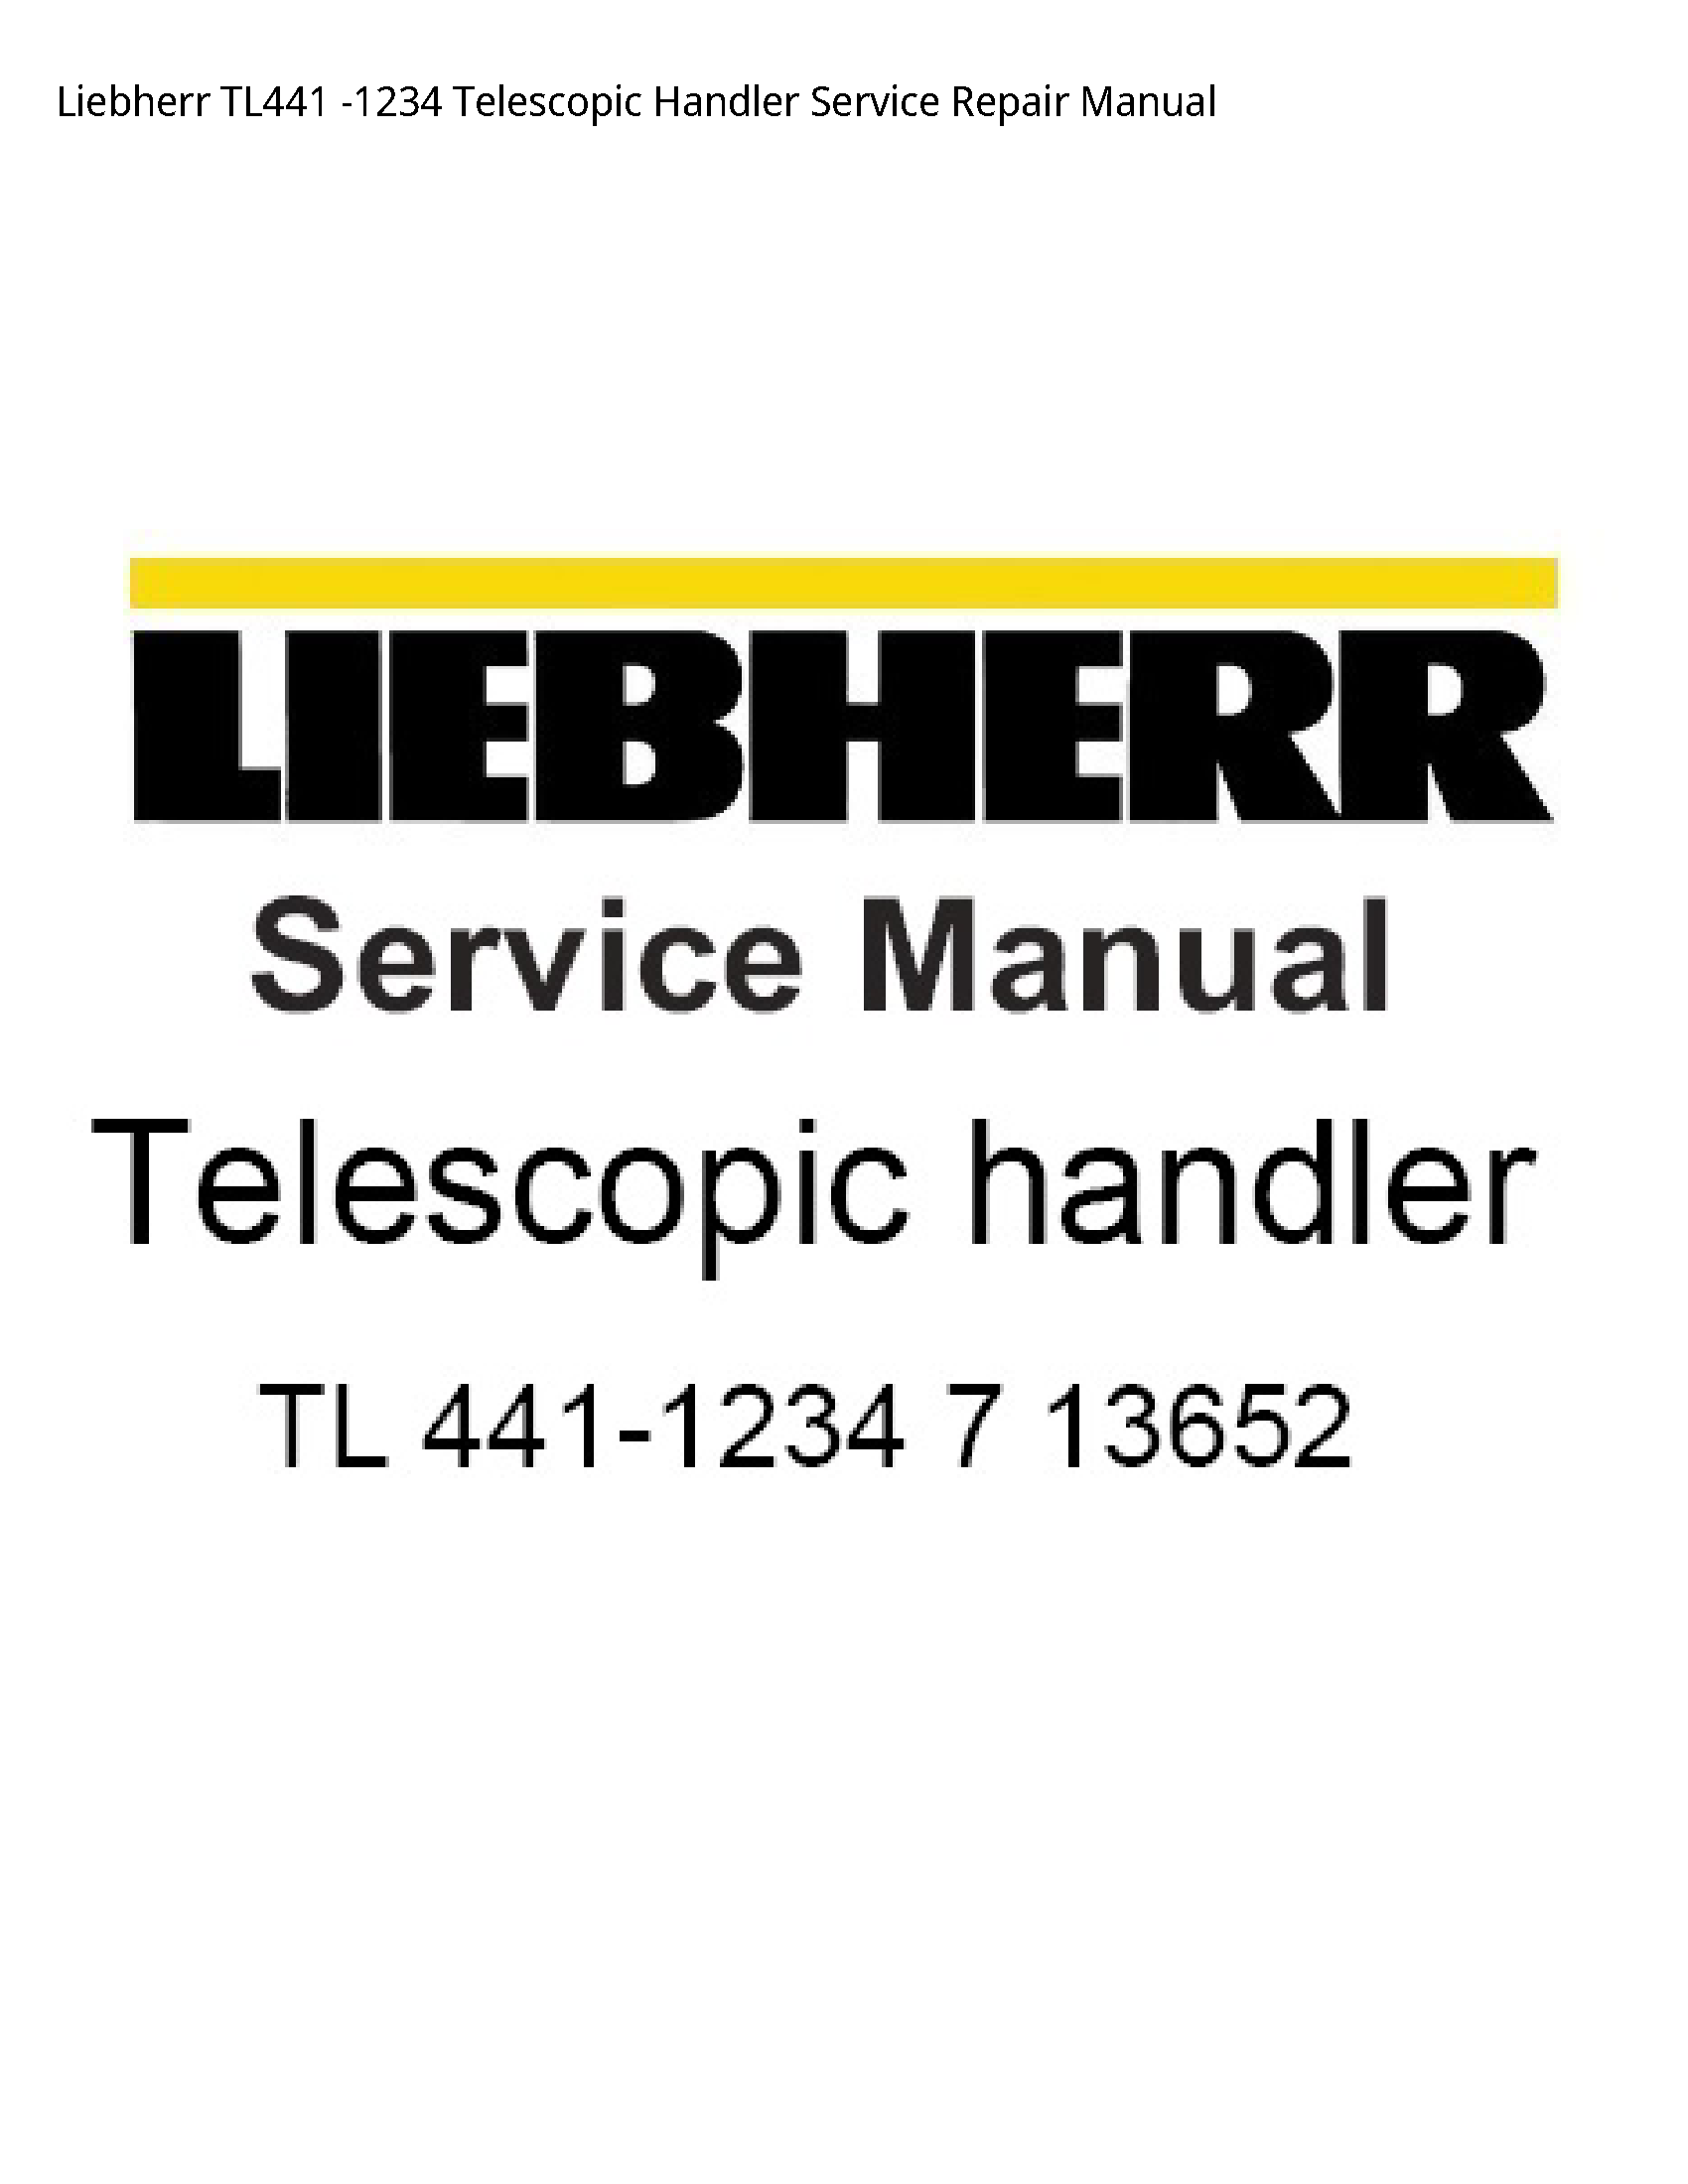 Liebherr TL441 Telescopic Handler manual